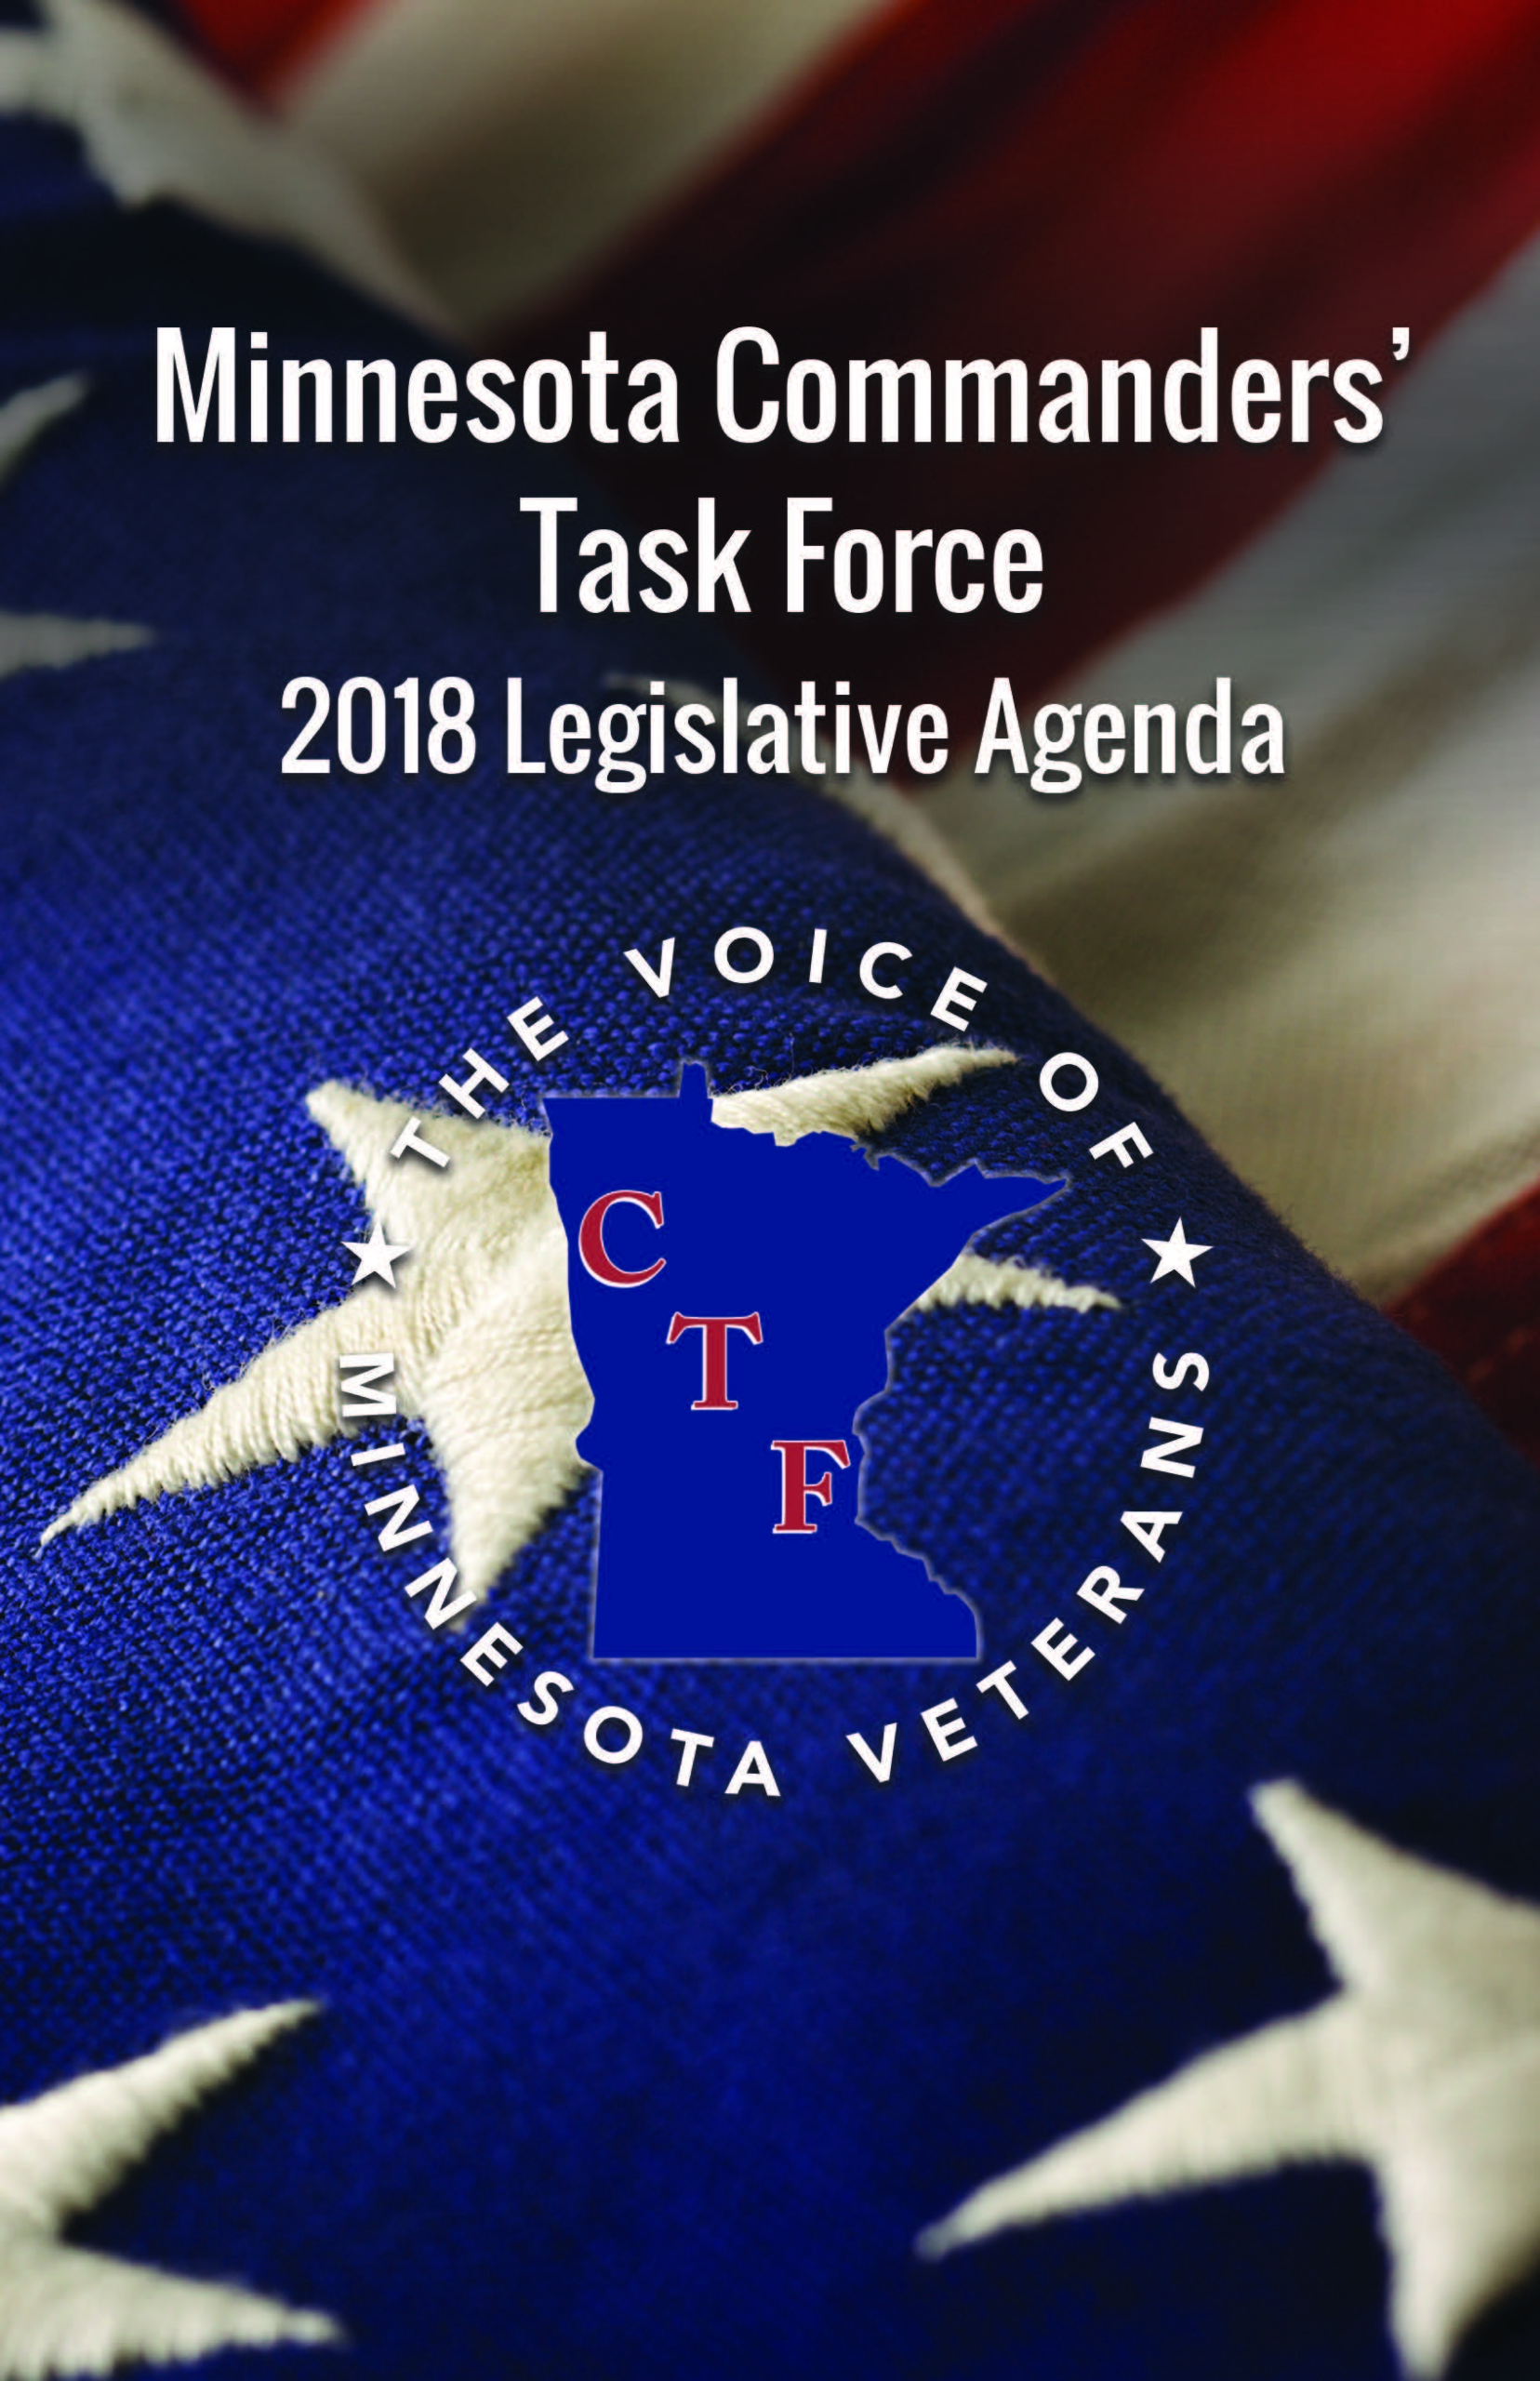 Minnesota Commanders' Task Force Legislative Agenda 2018